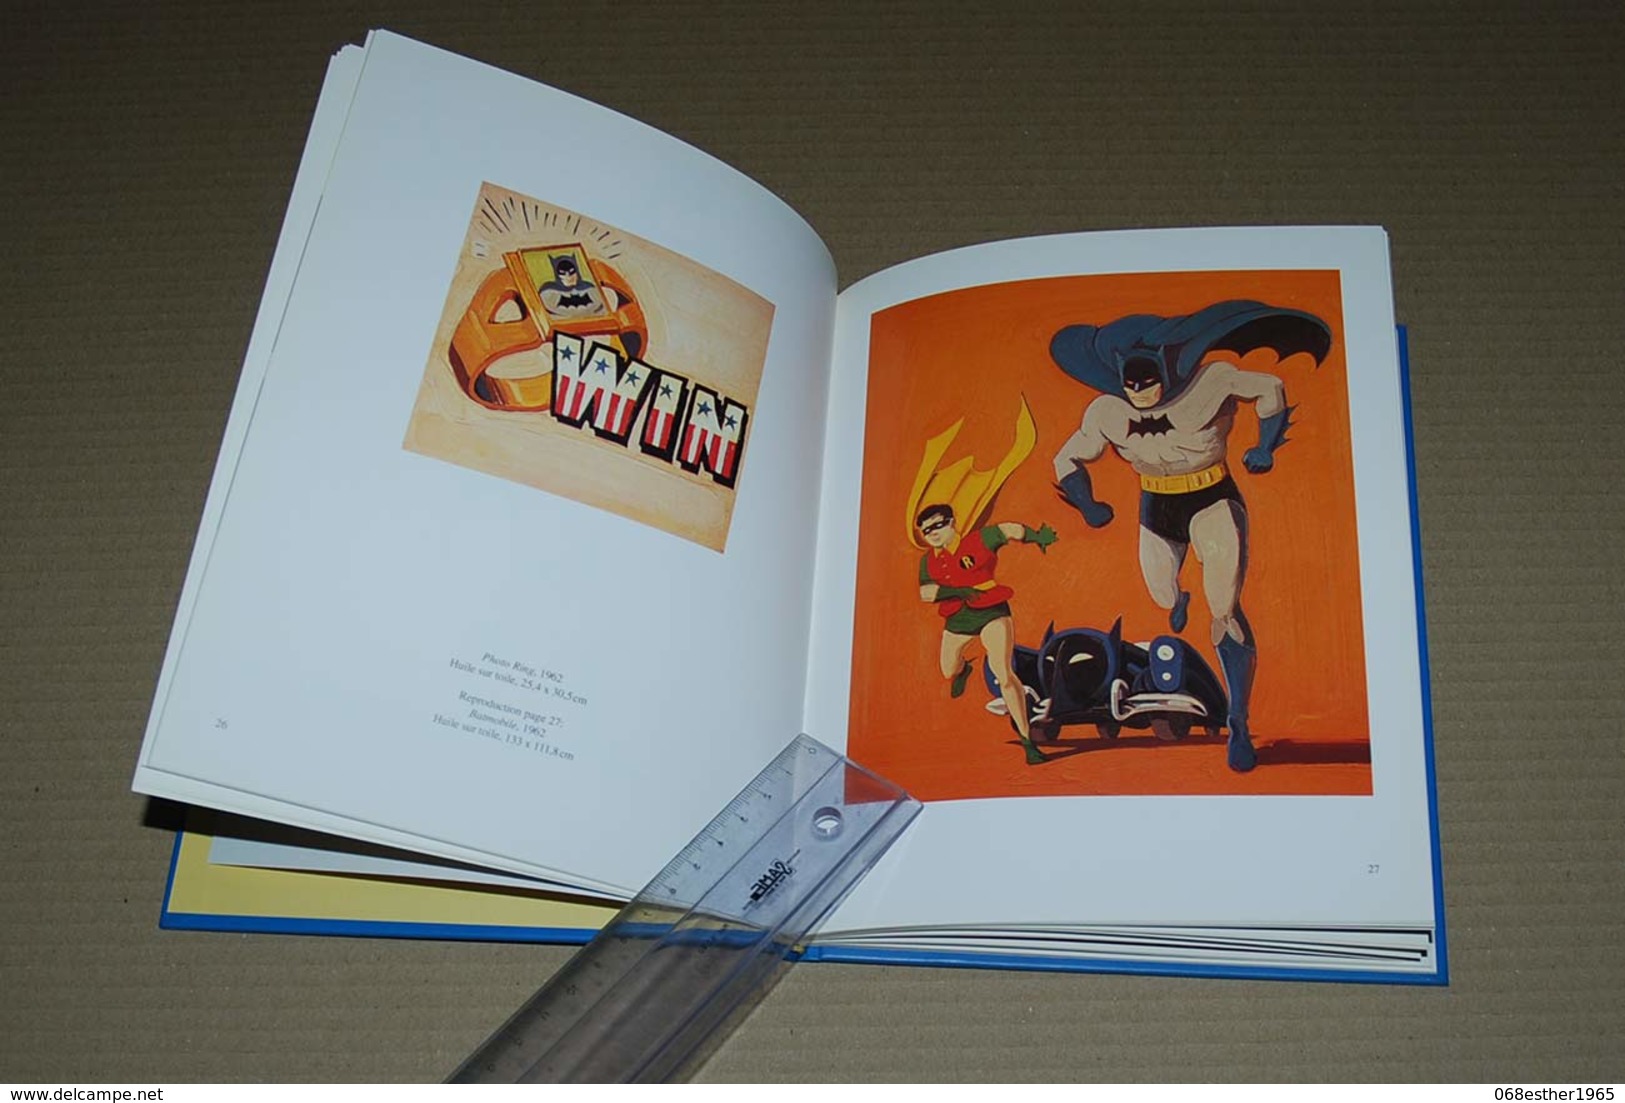 mel ramos pop art images pin-up, super héros etc edition taschen de 1994